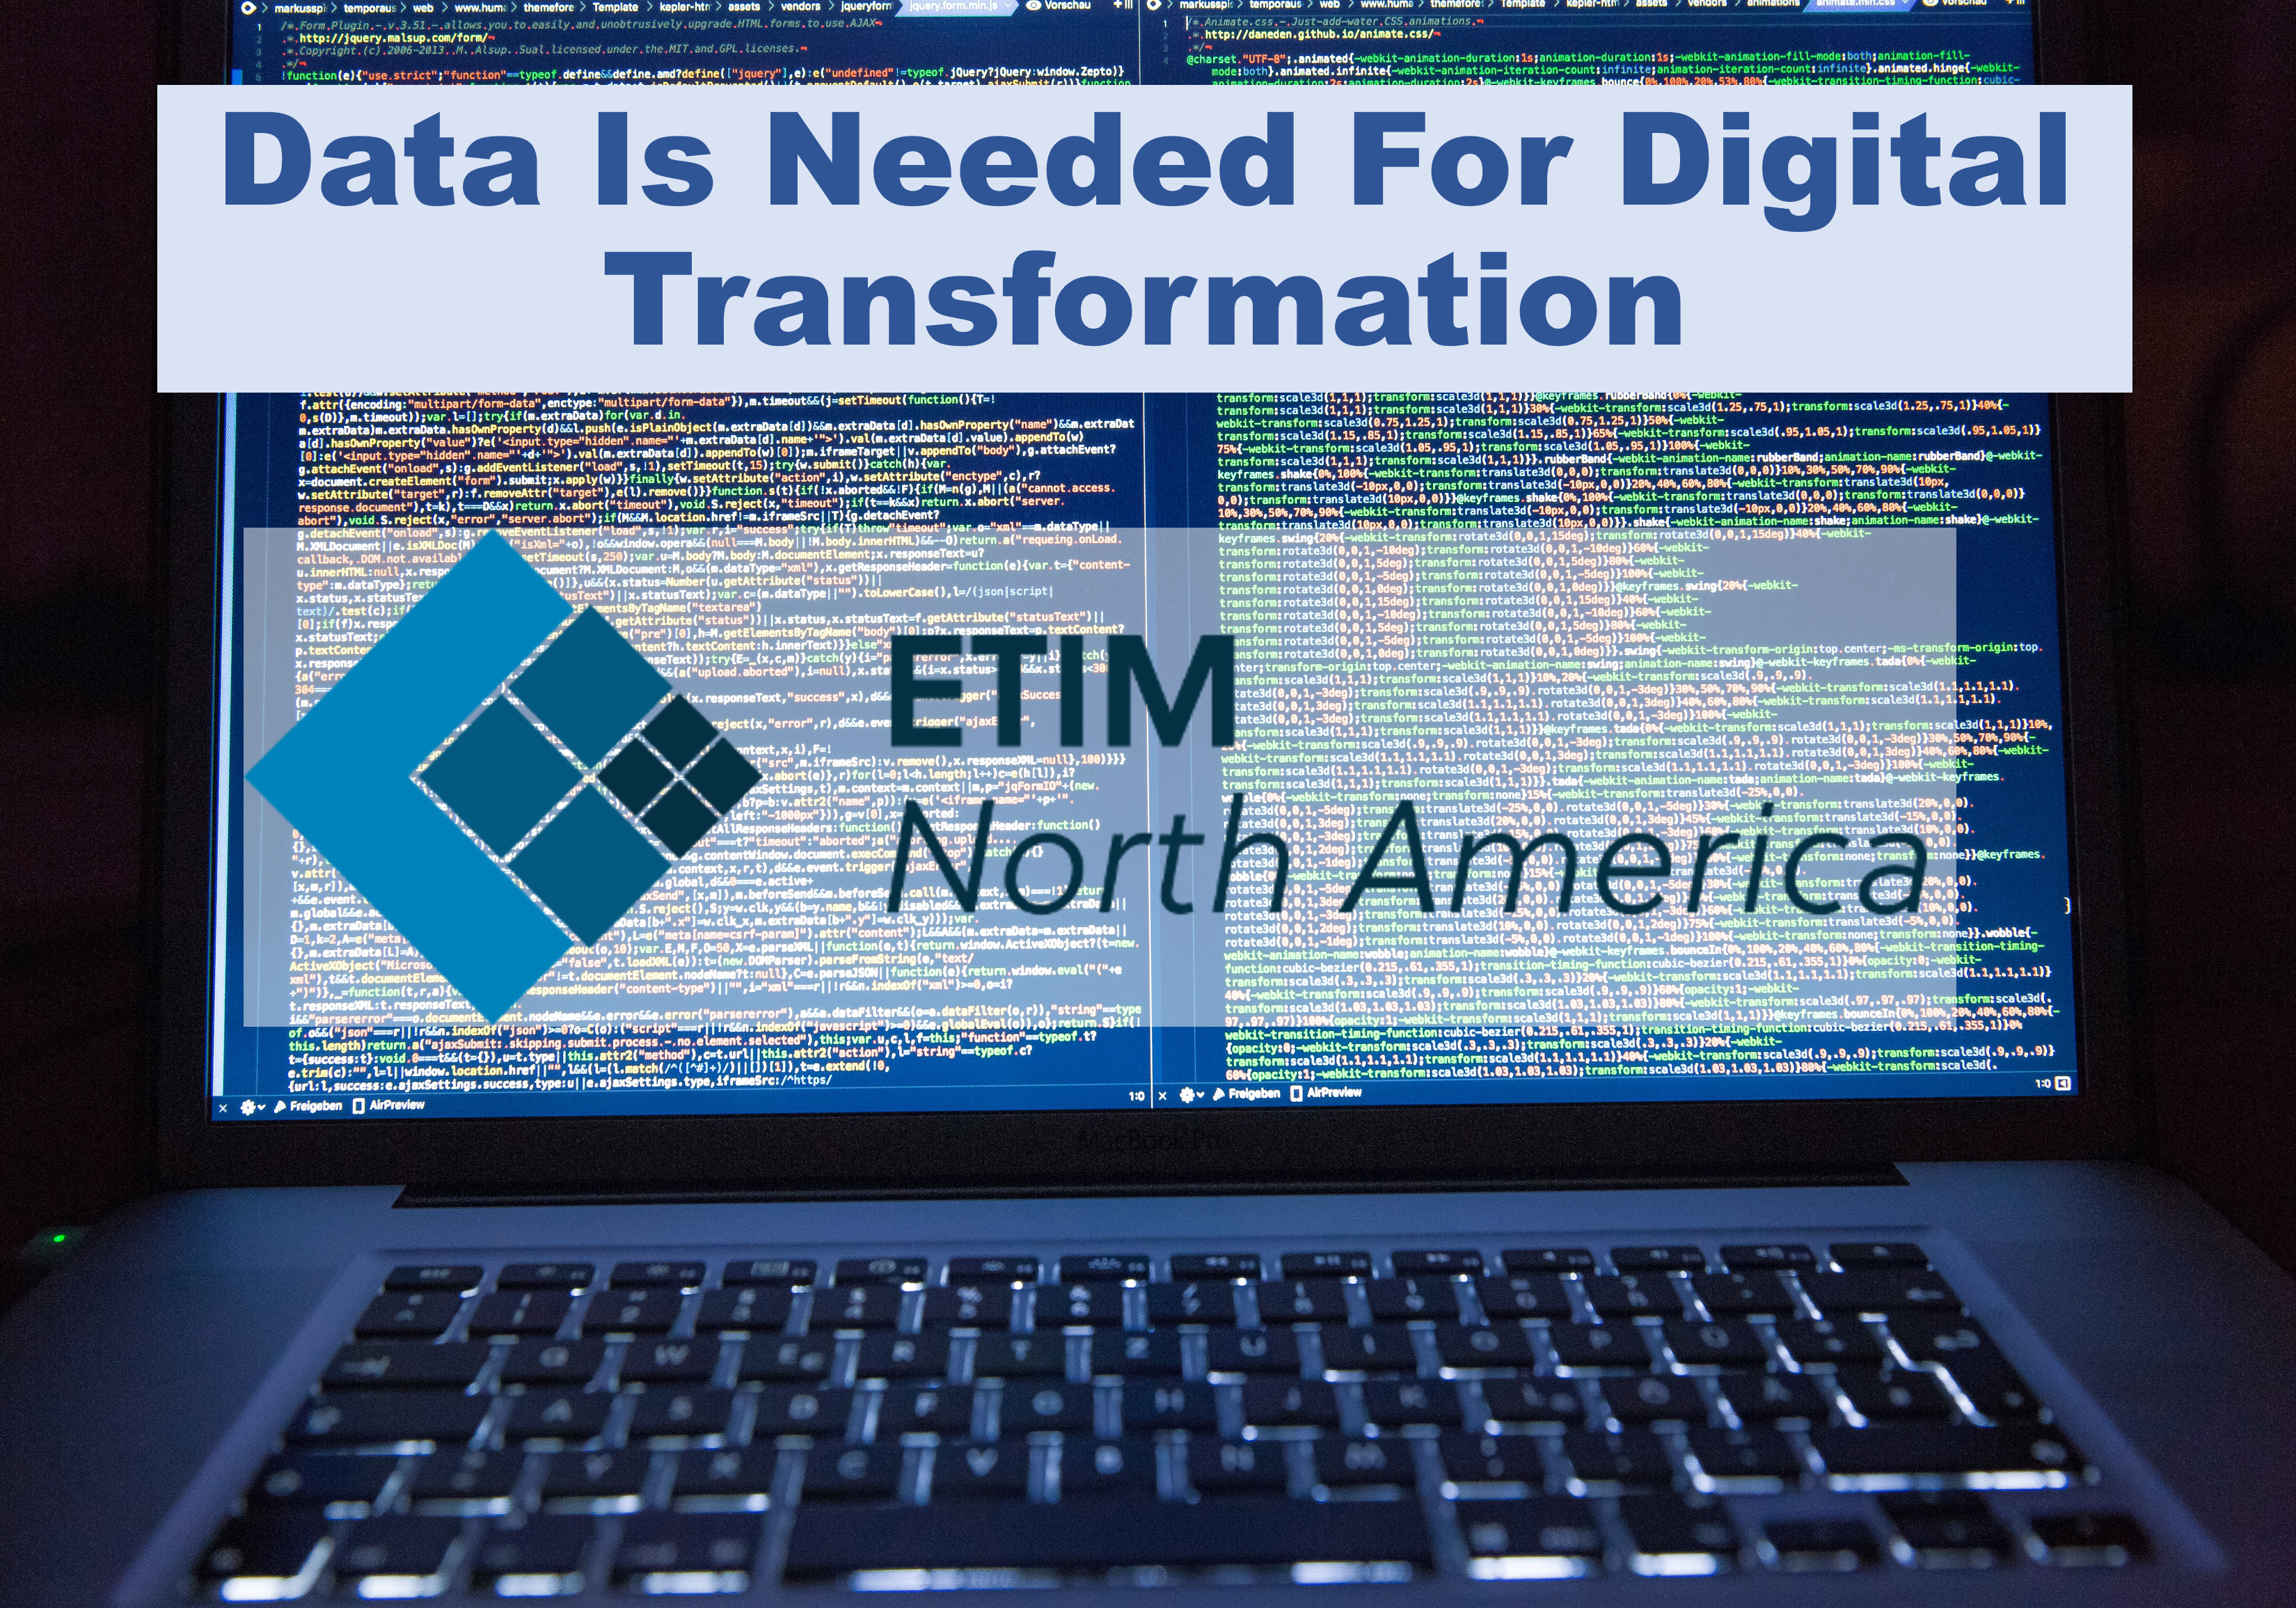 Electrical Industry Digital Transformation Data Powered by ETIM